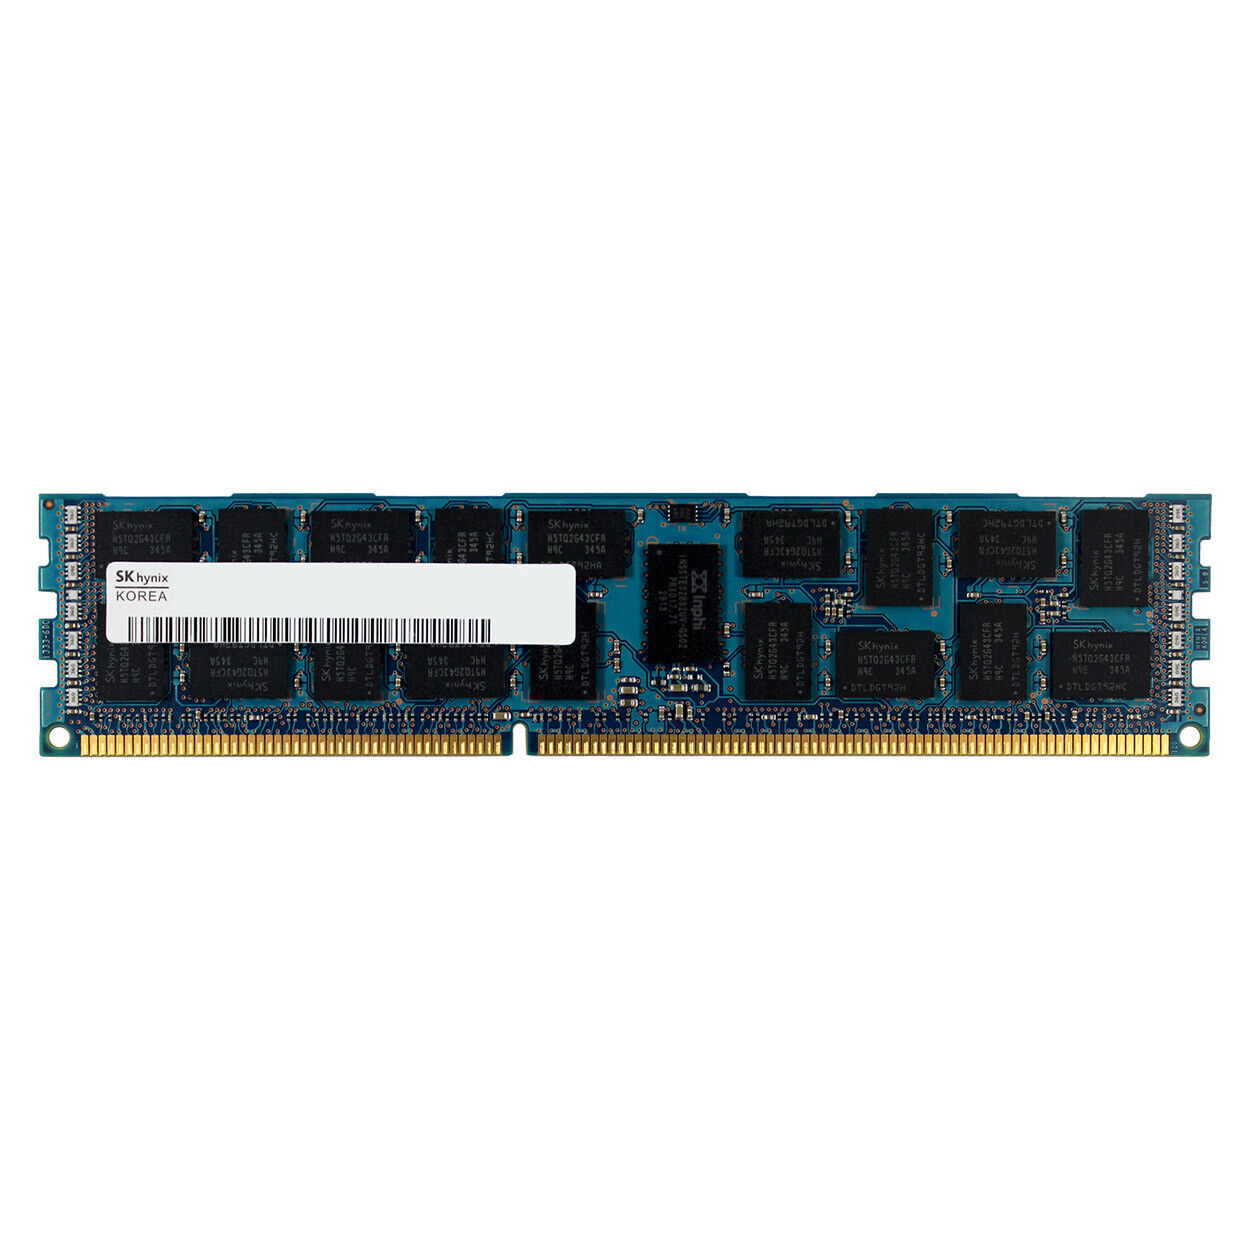 Hynix 8GB 2Rx4 PC3-10600R DDR3 1333MHz 1.5V ECC REGISTERED RDIMM Memory RAM 1x8G